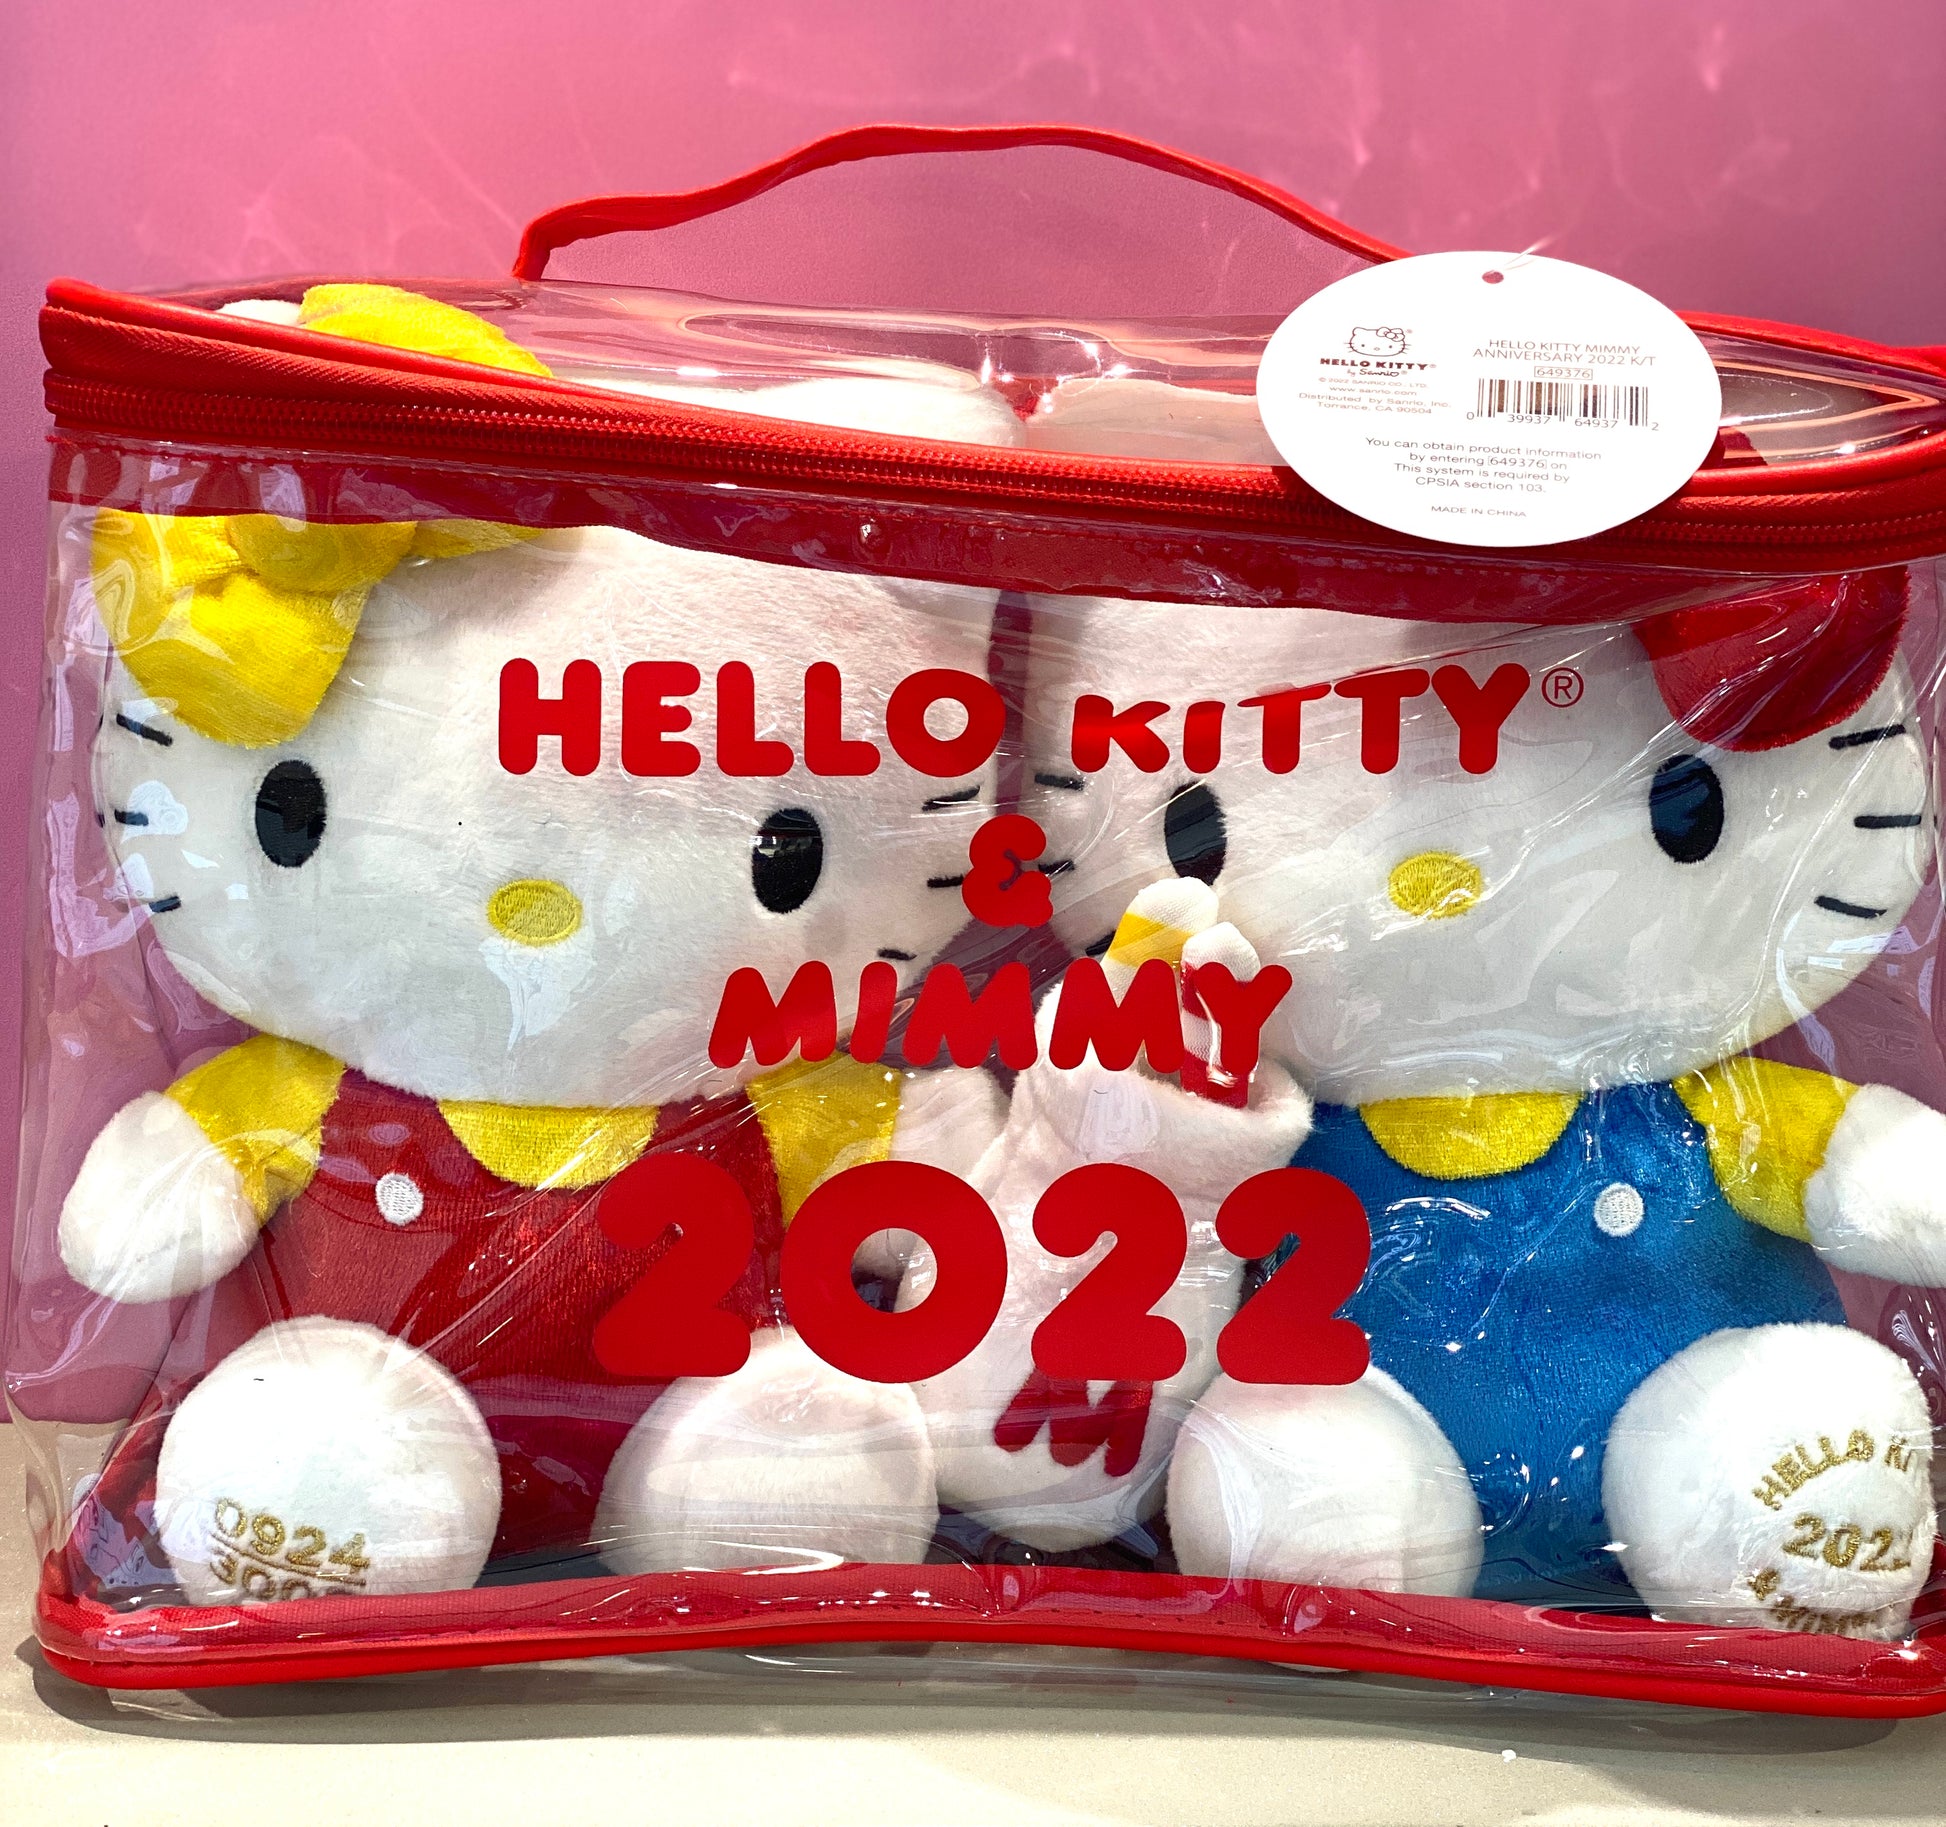 Hello Kitty & Mimmy Anniversary 2022 Limited Edition Plush